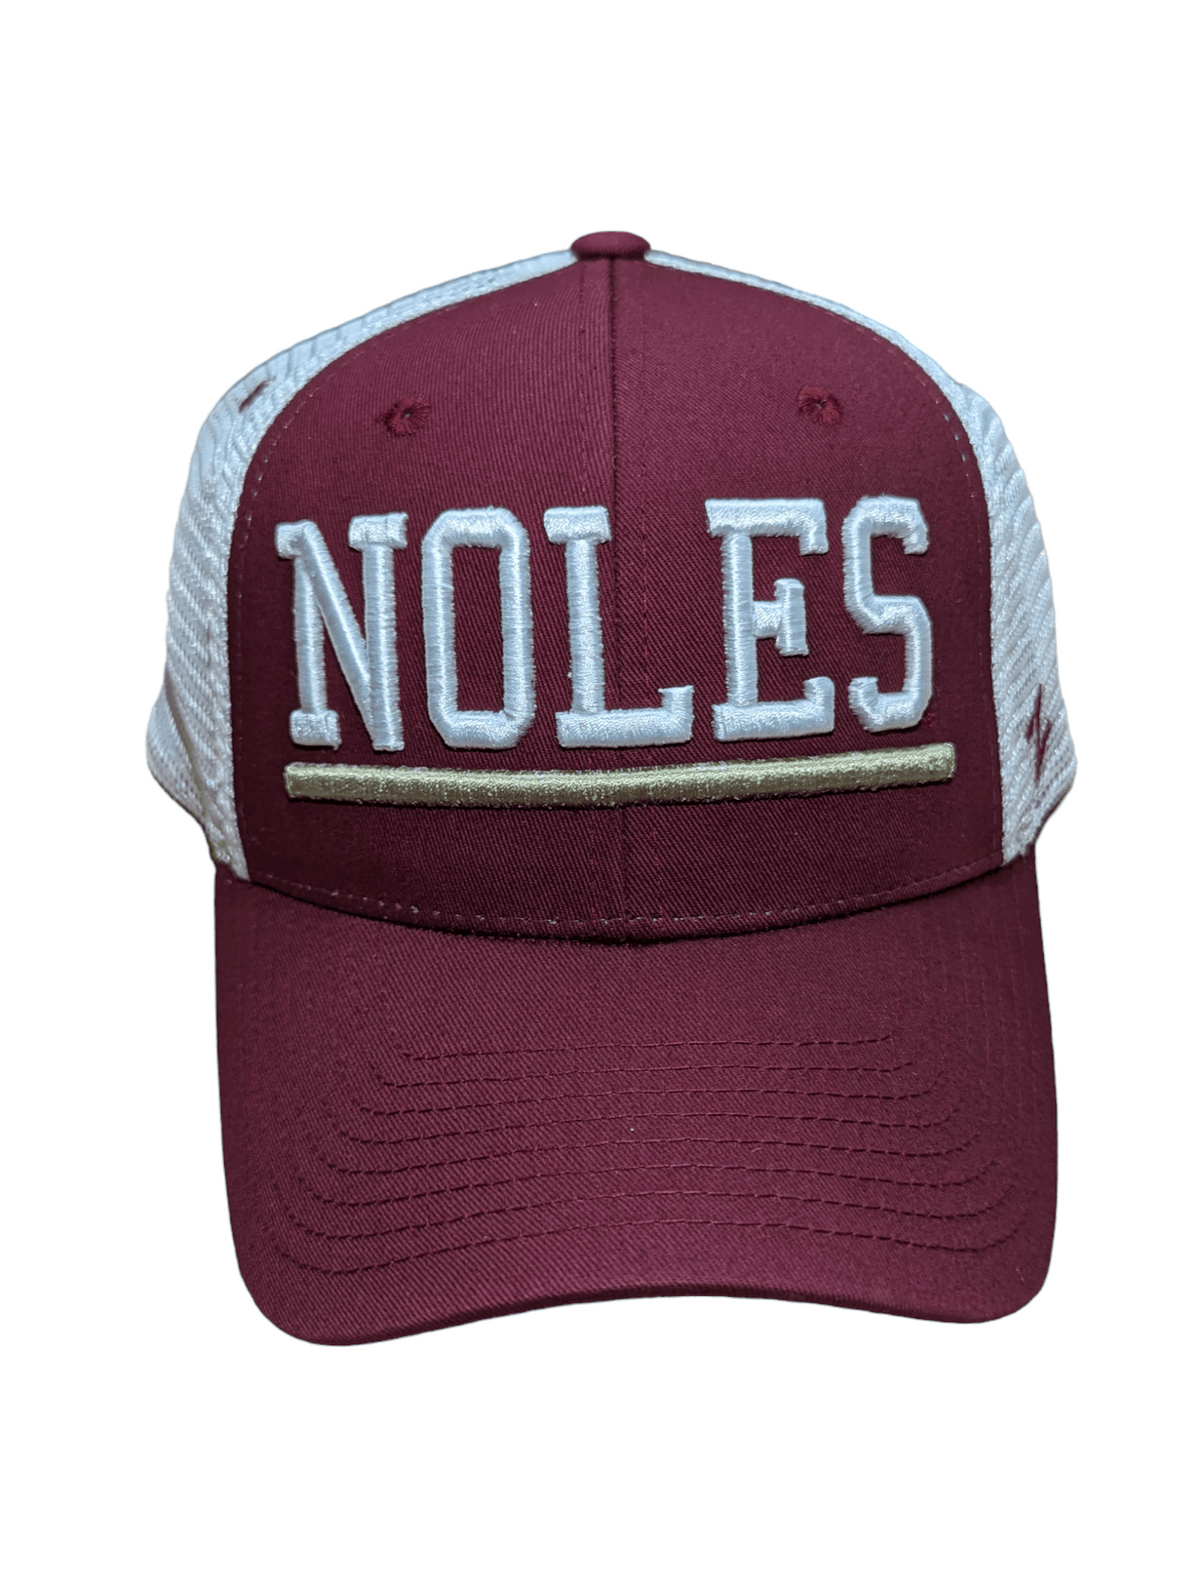 Zephyr Apparel & Accessories Florida State Noles Upfront hat